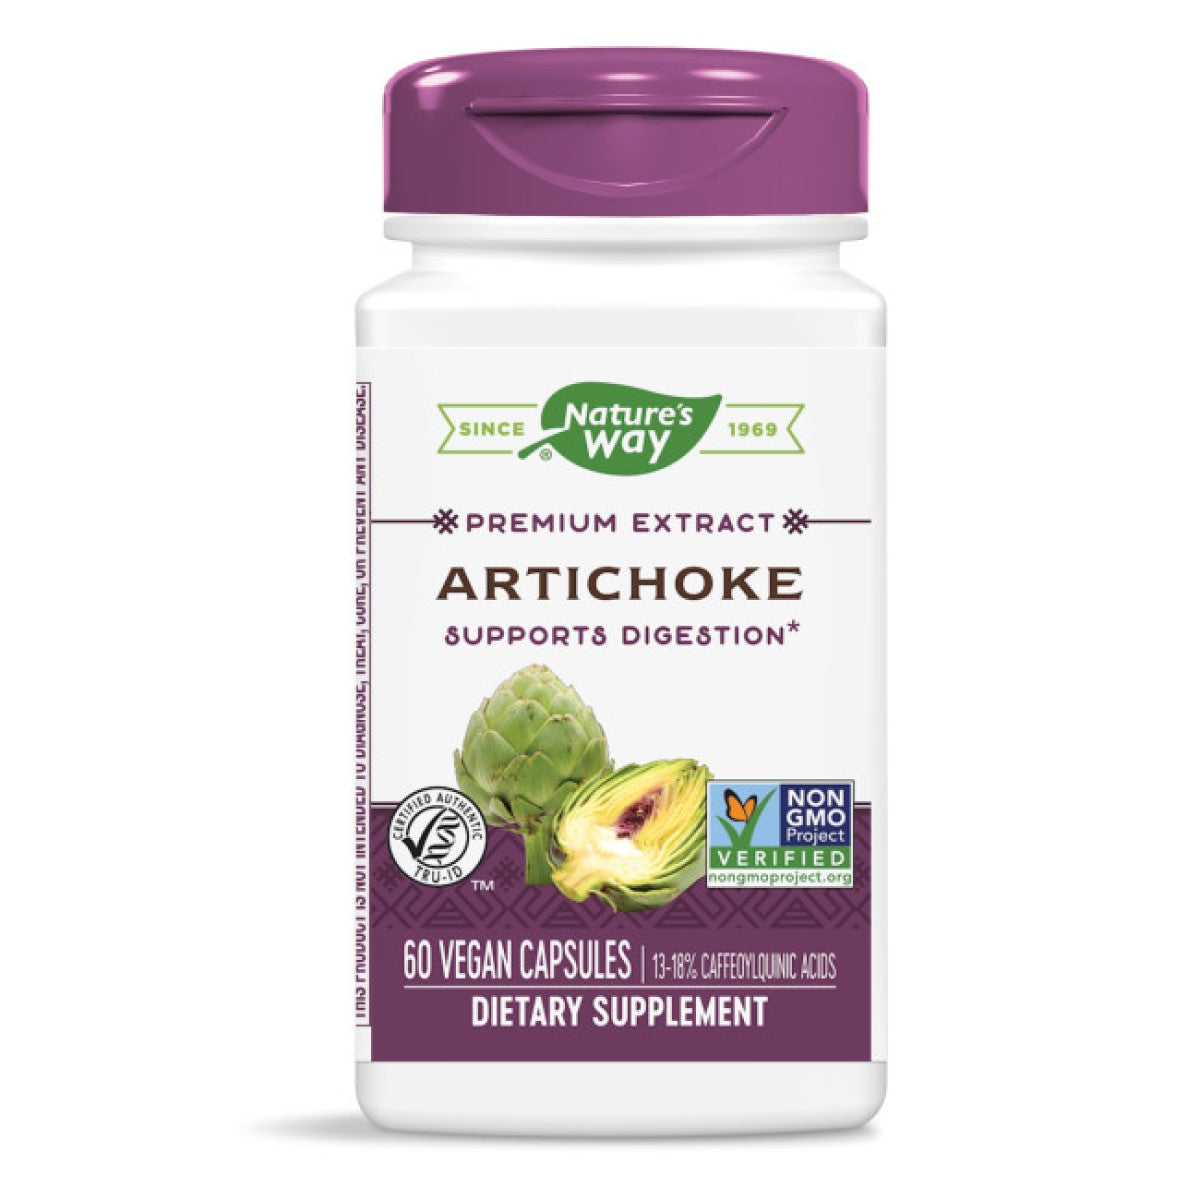 Primary image of Artichoke Extract